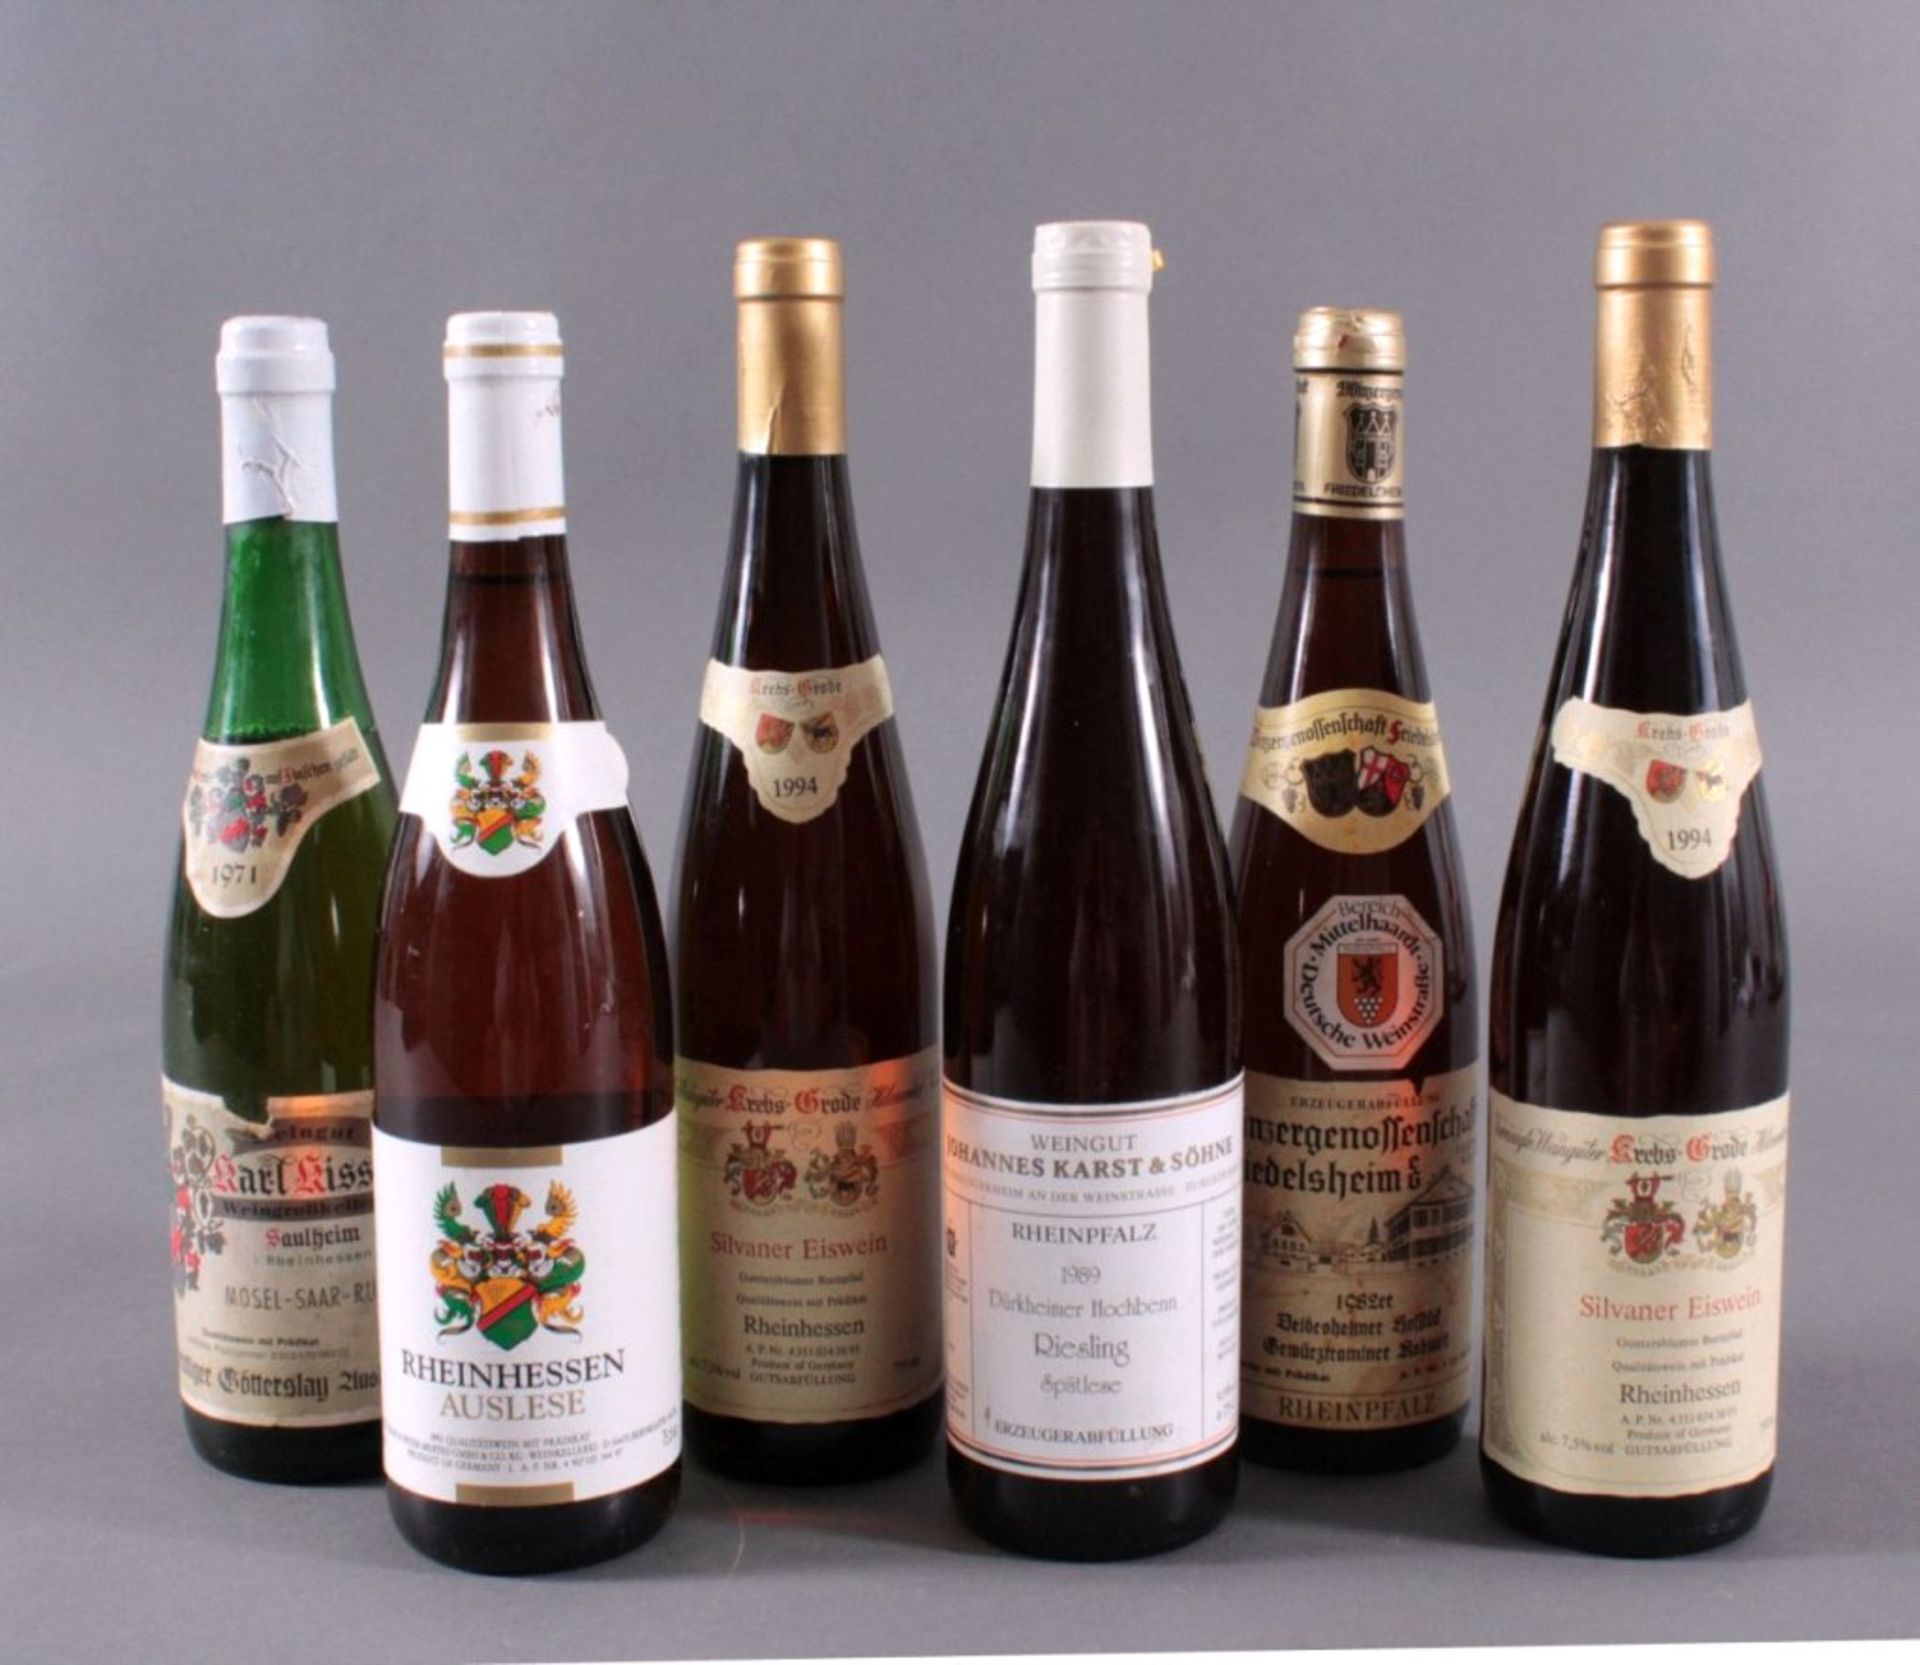 6 Flaschen Weißwein1x 1971er Mosel-Saar-Ruwer, Saulheim, Rheinhessen.1x 1982er Deidesheimer